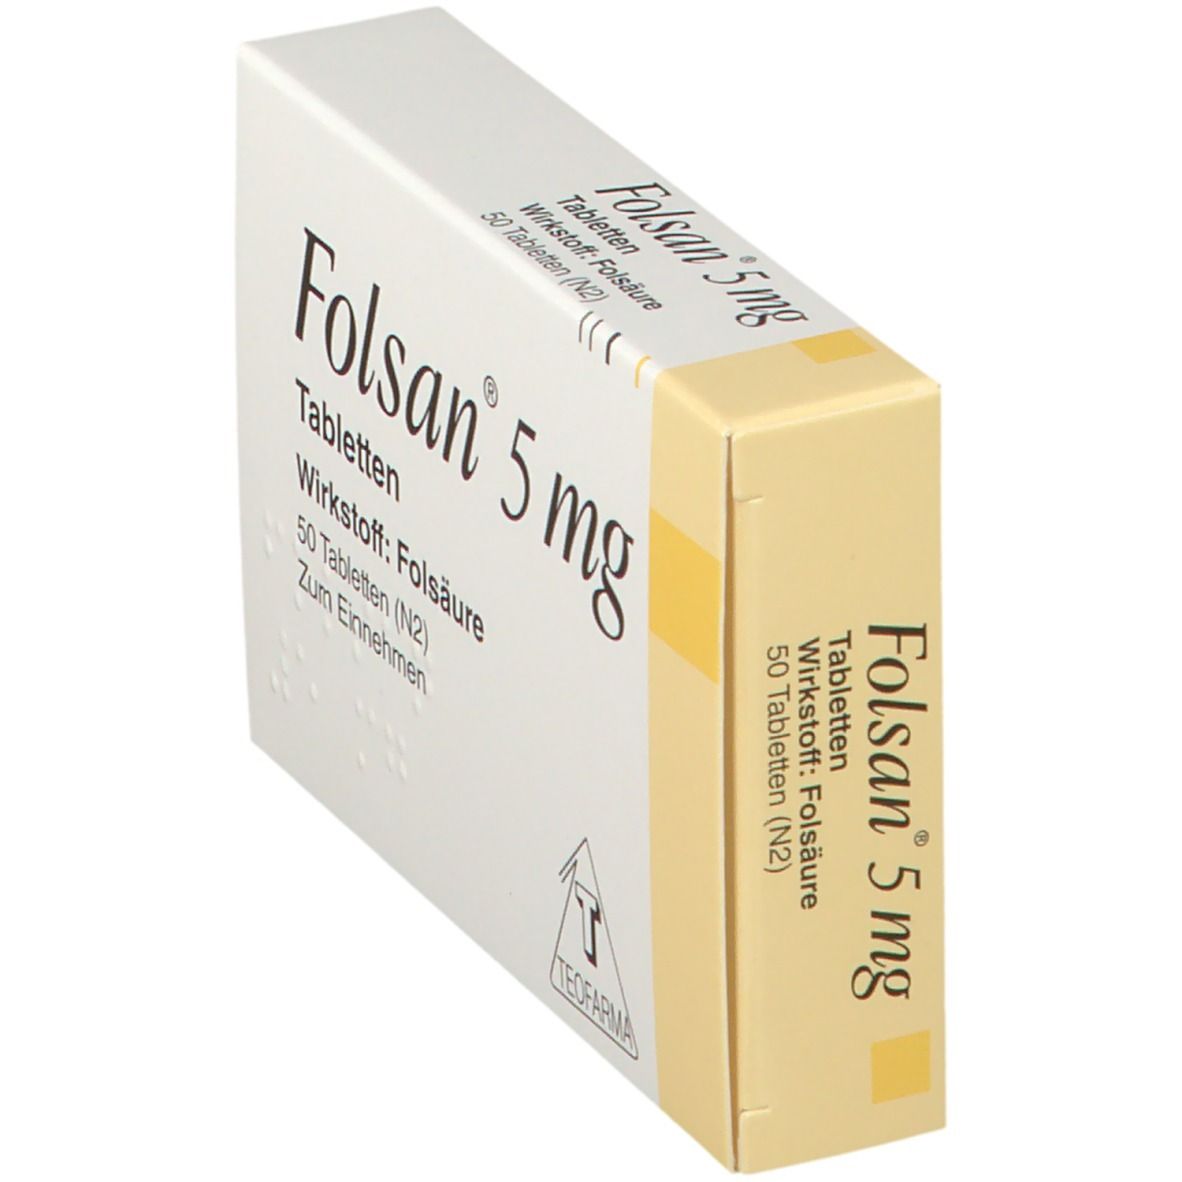 Folsan® 5 mg